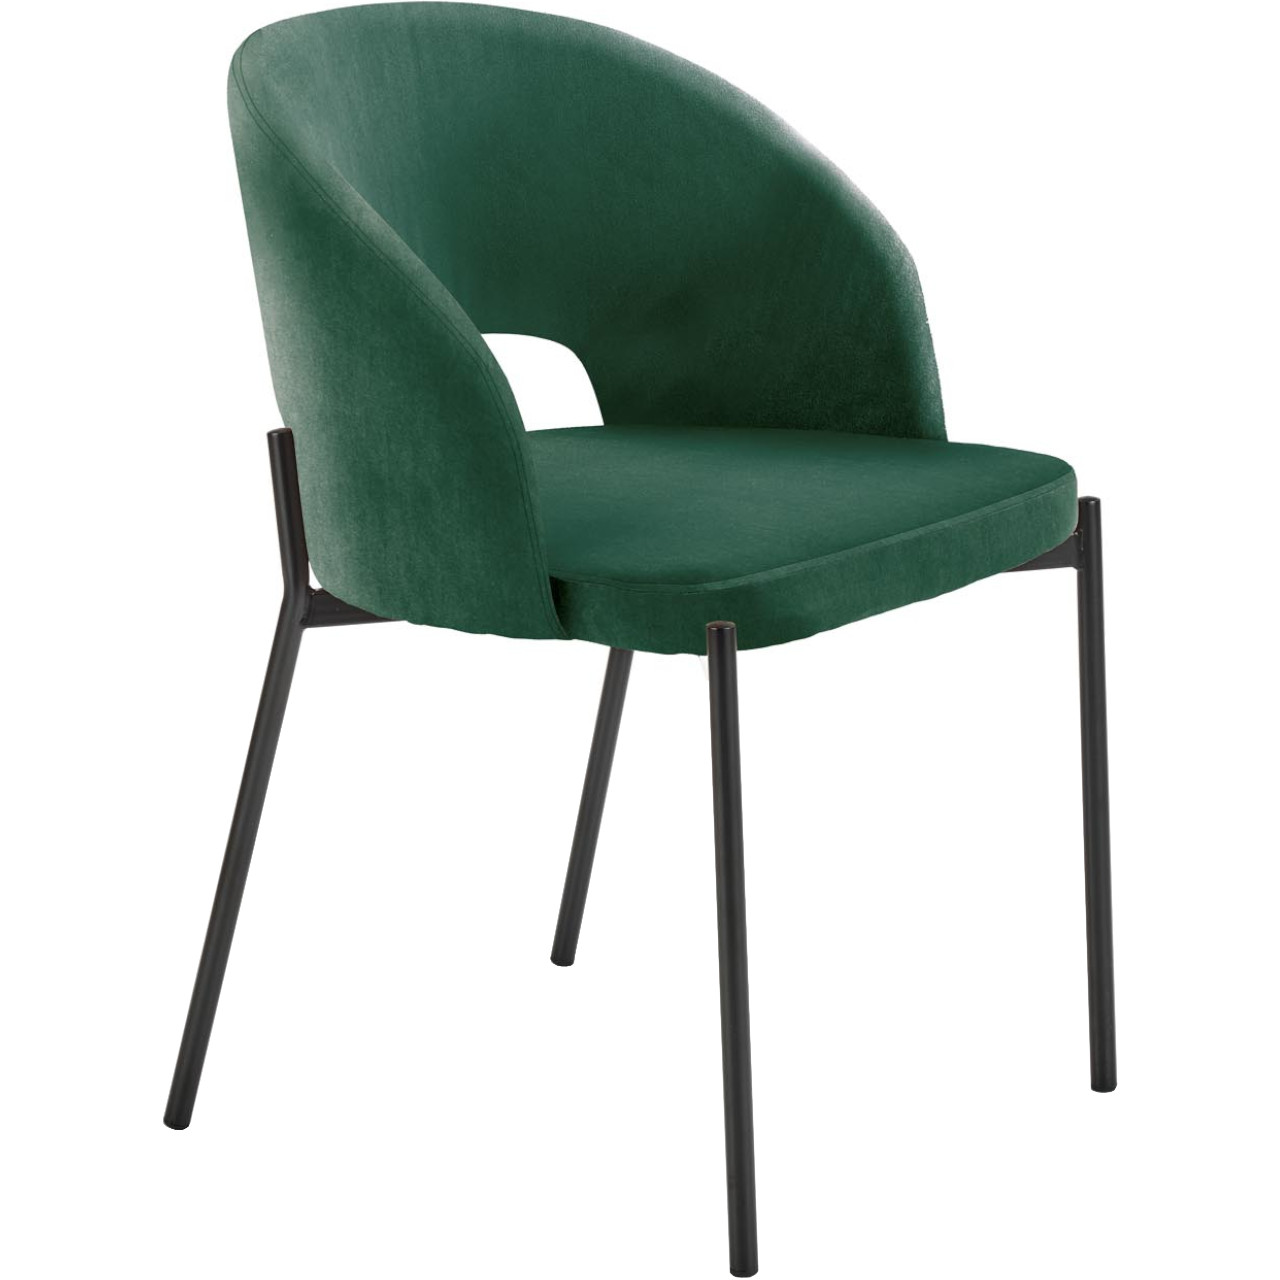 Chair K455 dark green